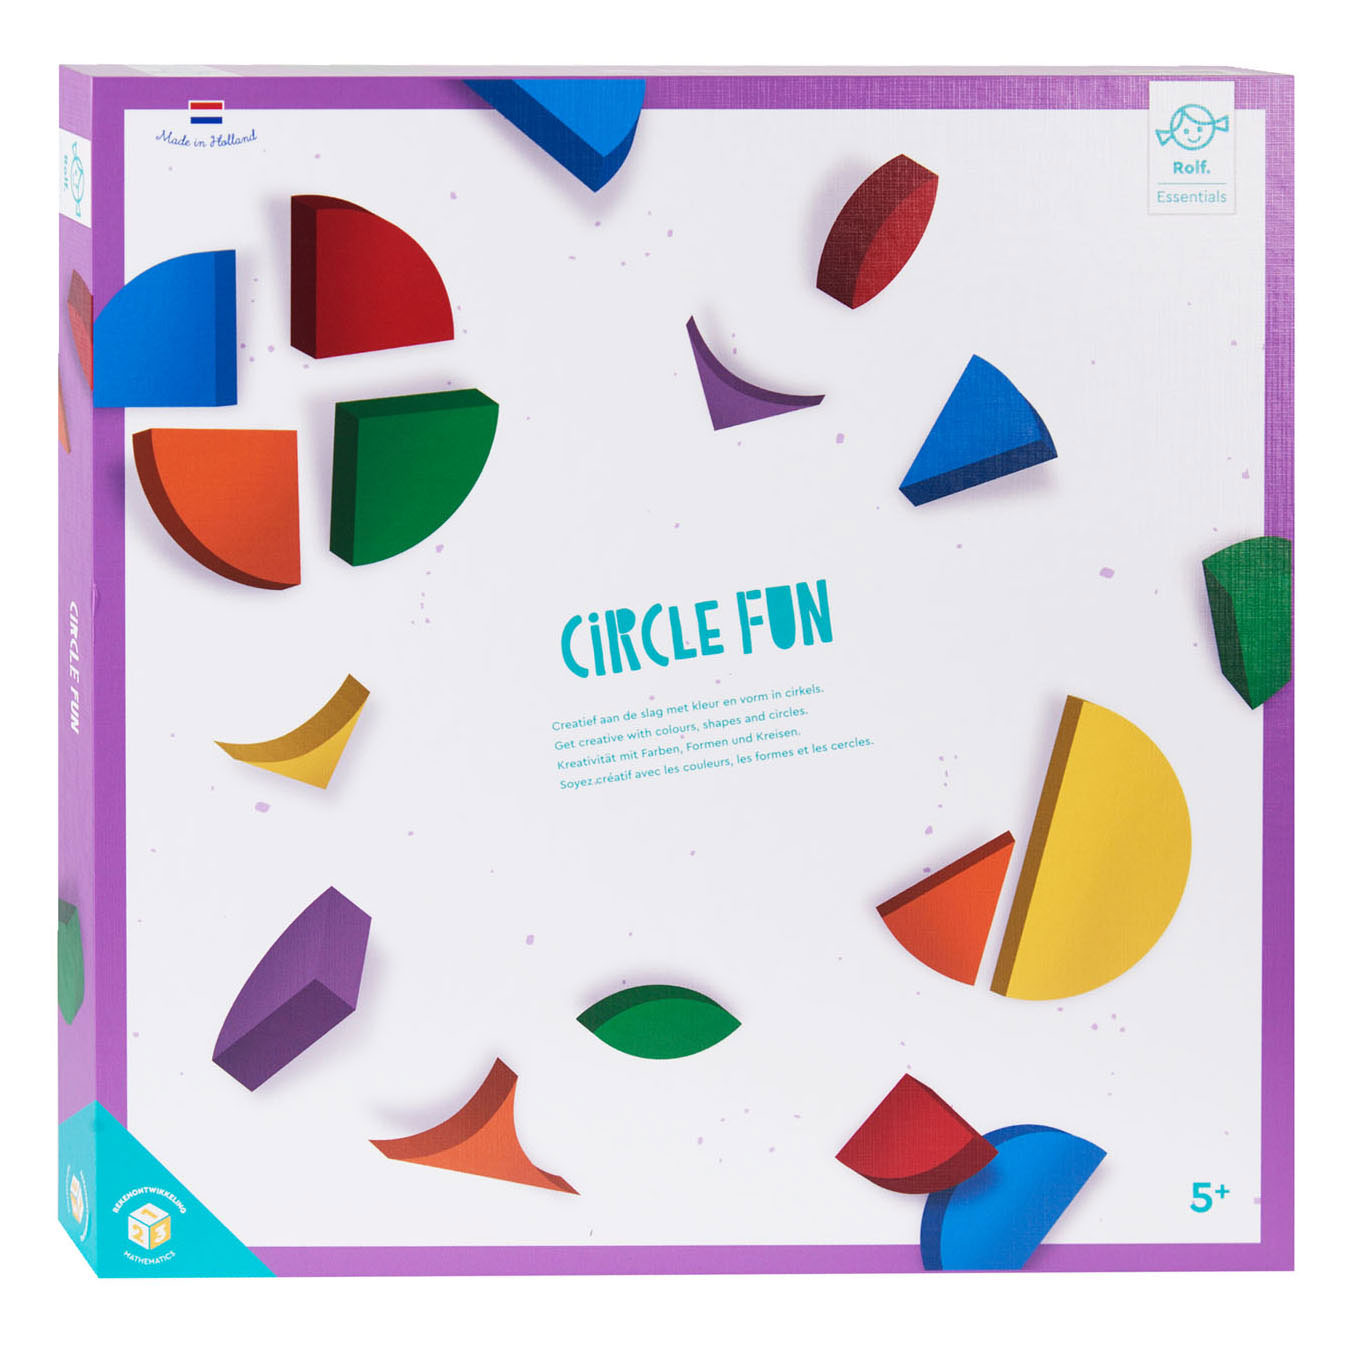 Rolf Essentials - Circle Fun Vormenspel